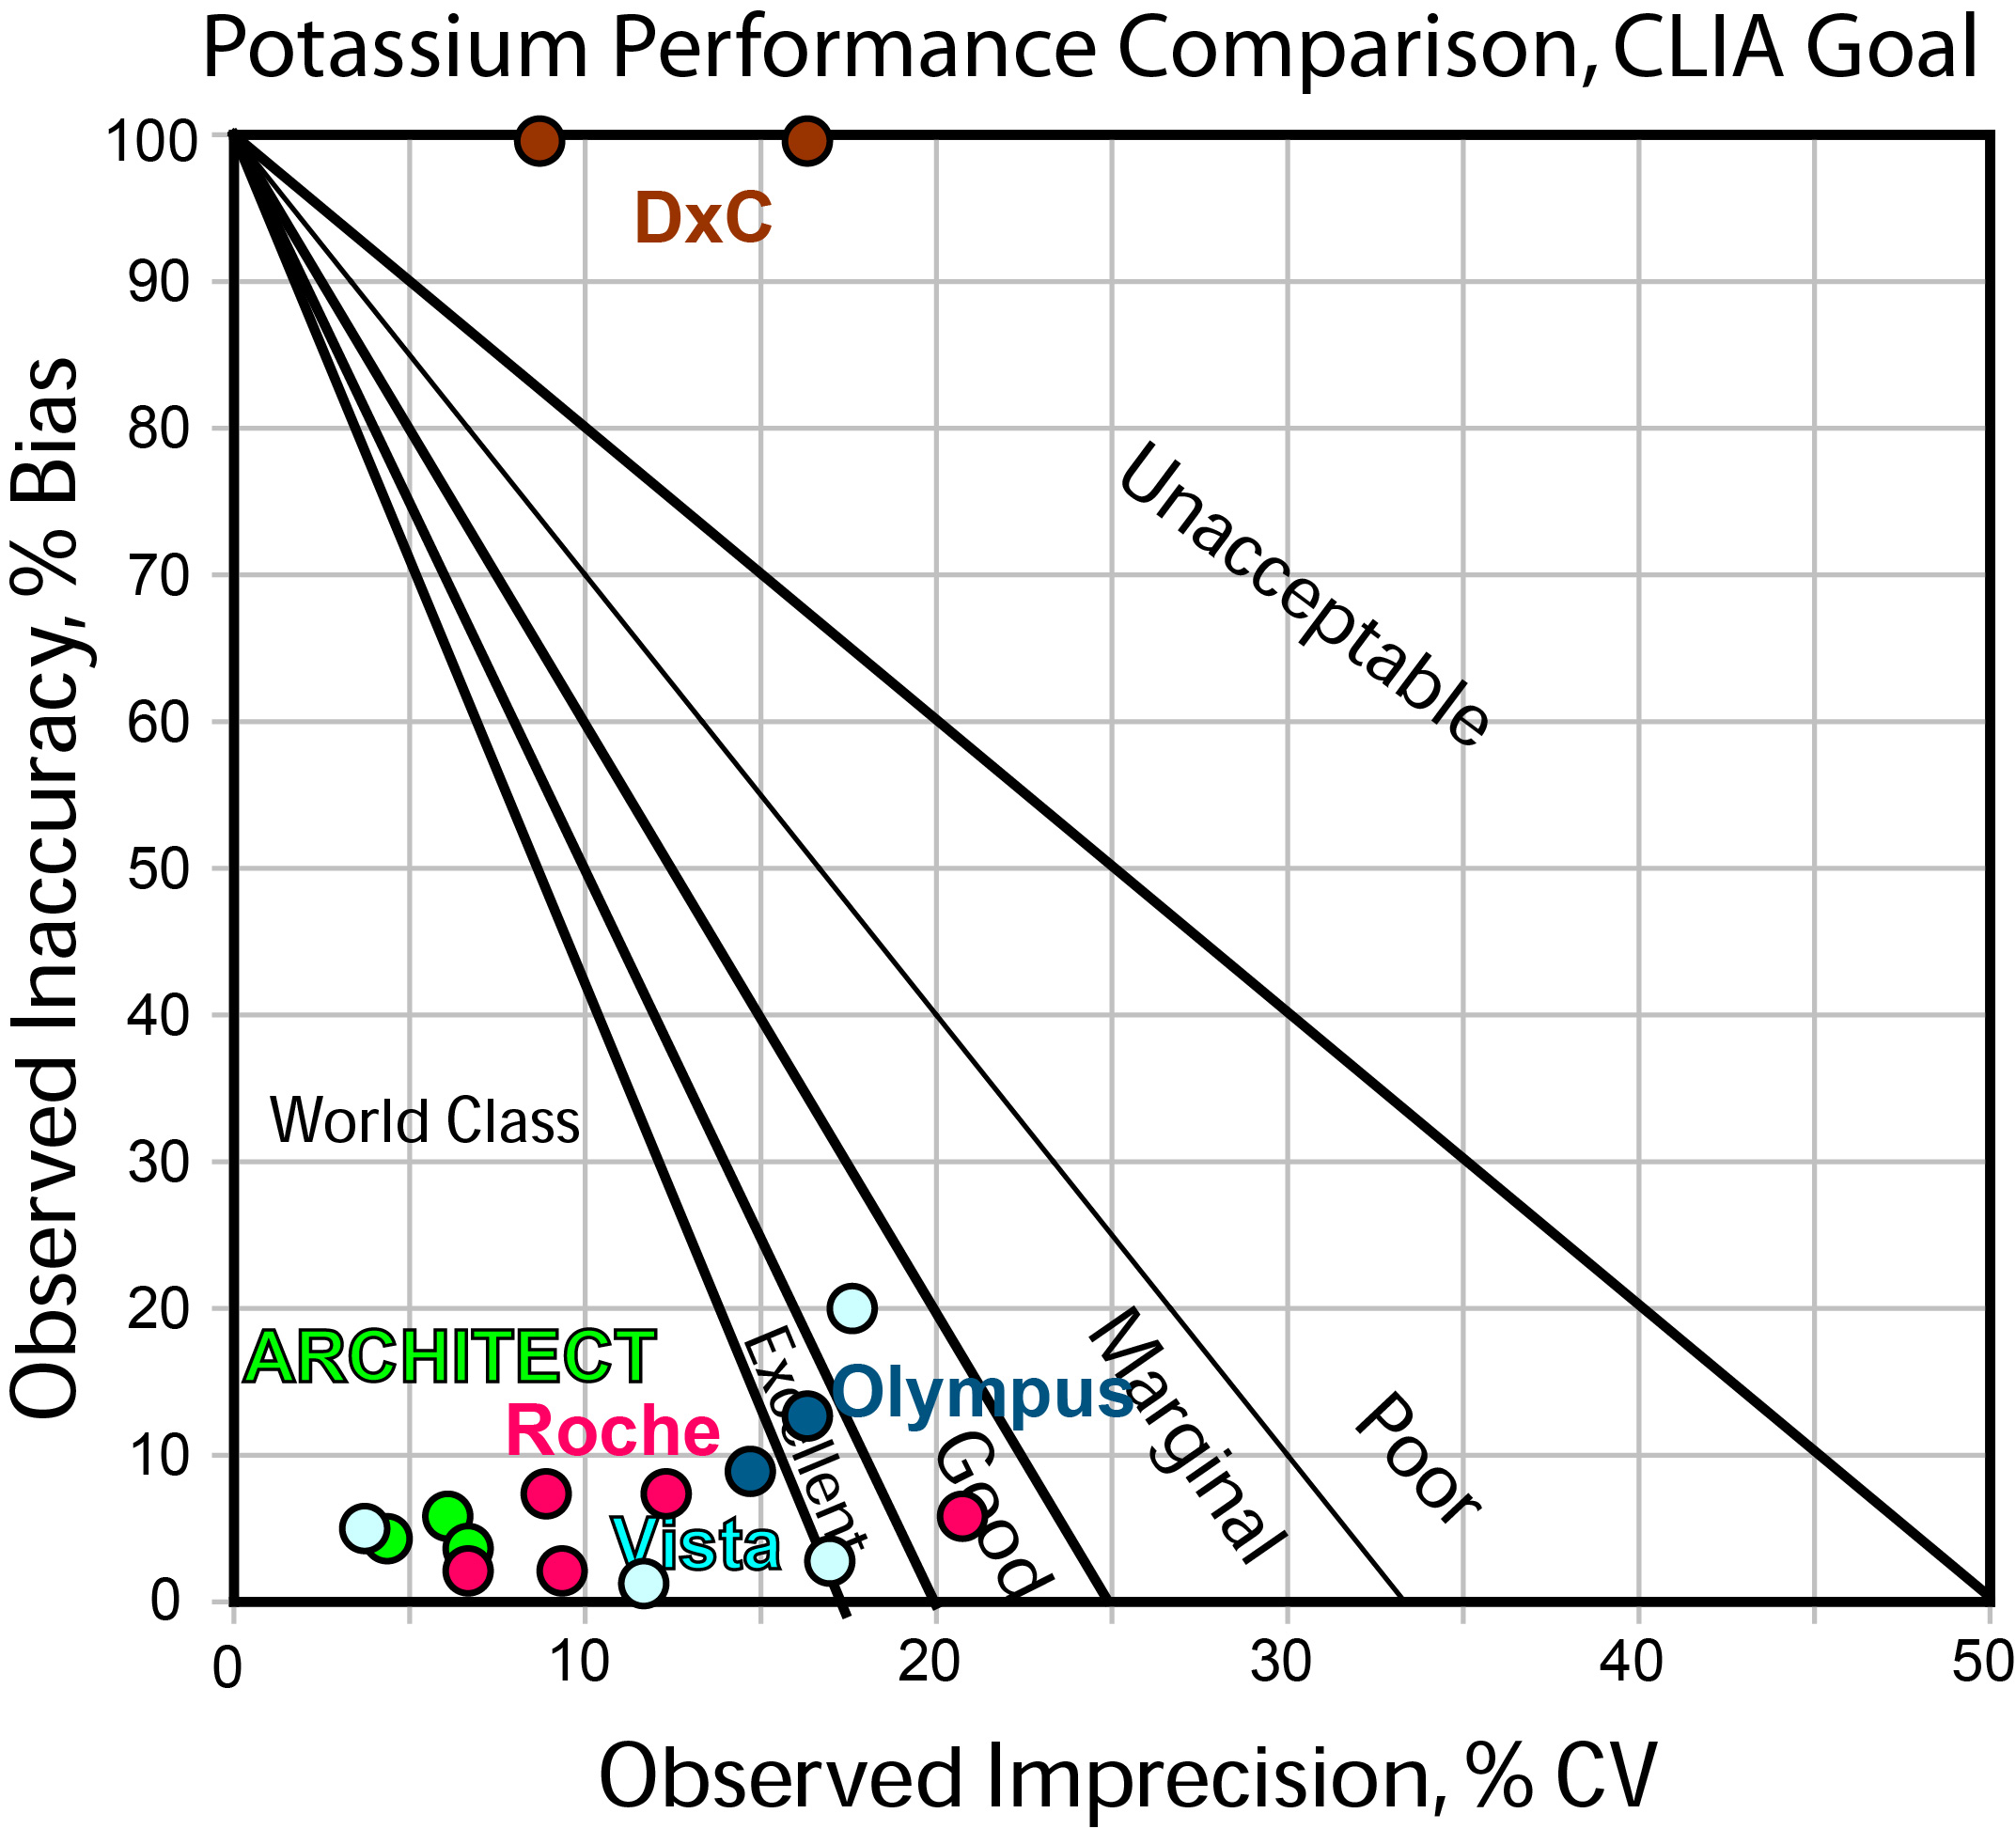 Potassium Comparison CLIA goal